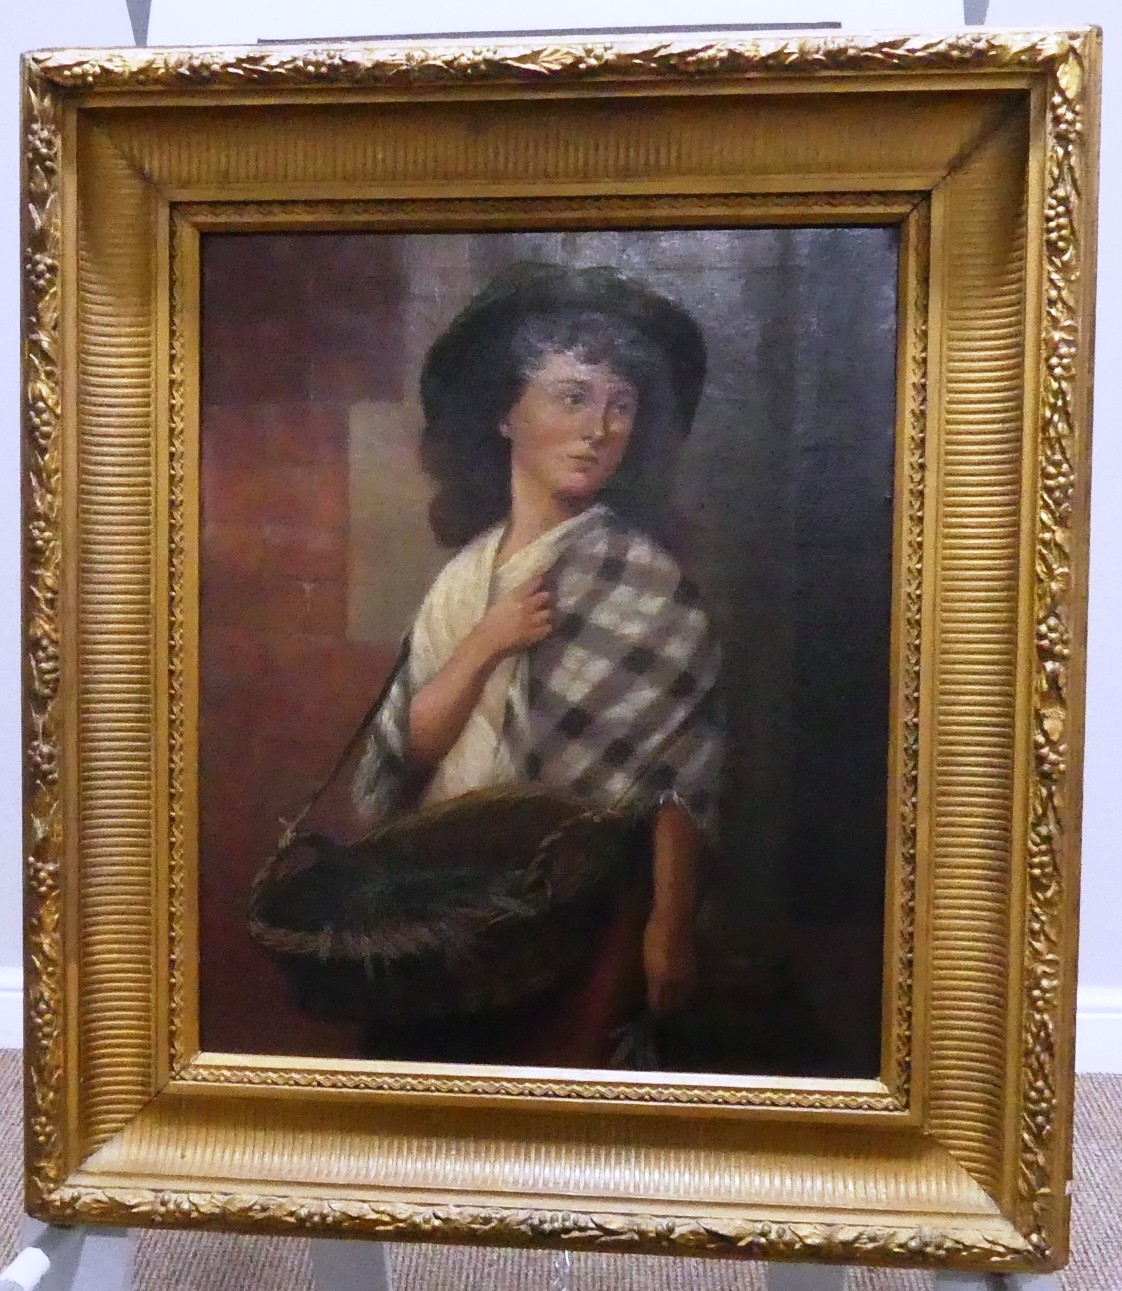 Andrew Beer (attrib.) (British, 1862-1954), The Lavender Girl, oil on canvas, 46cm x 35cm), framed.